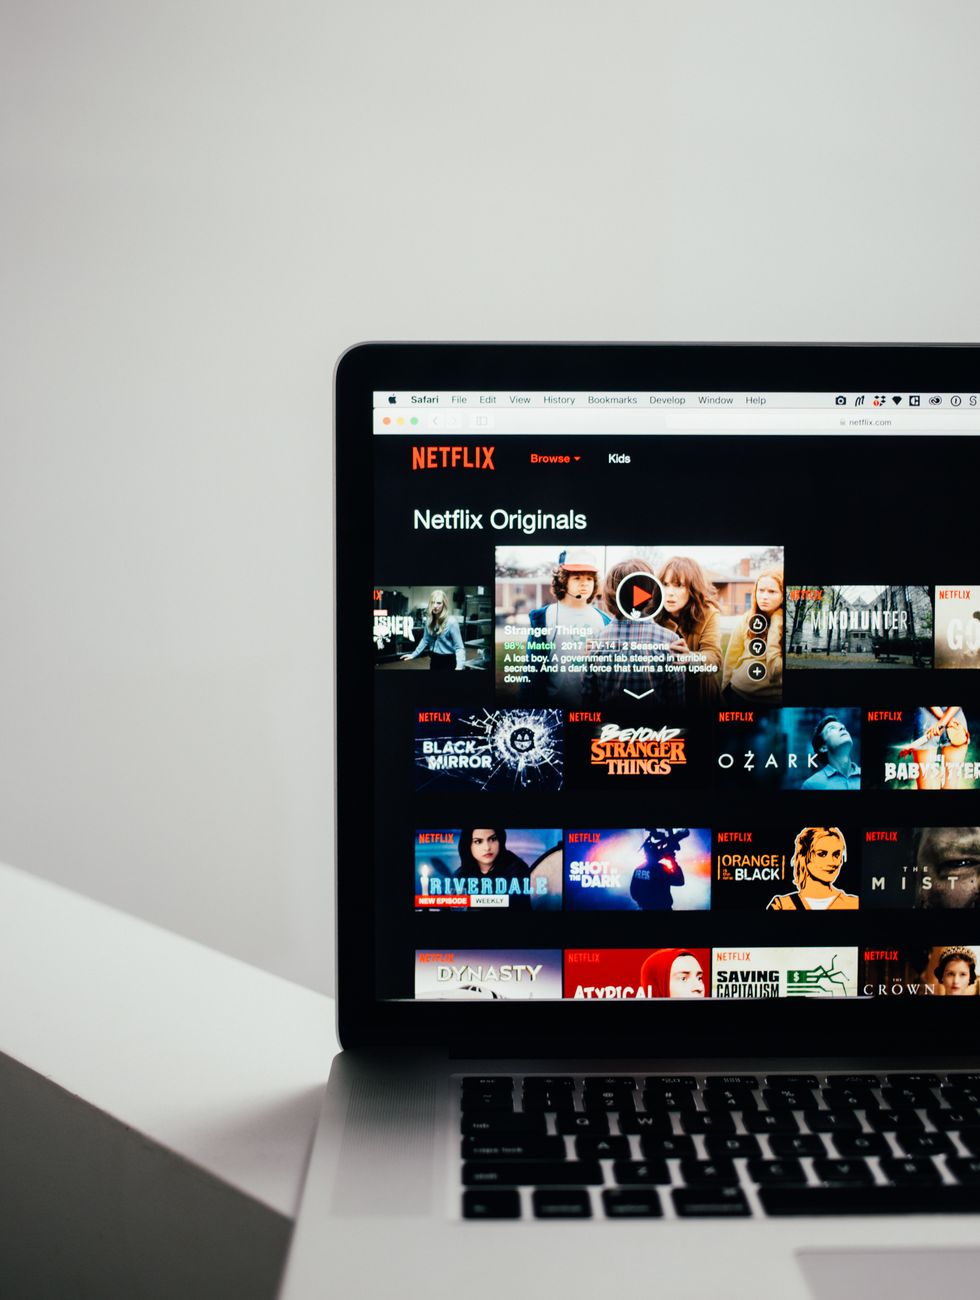 20 Netflix Shows For Your Winter Break Hibernation